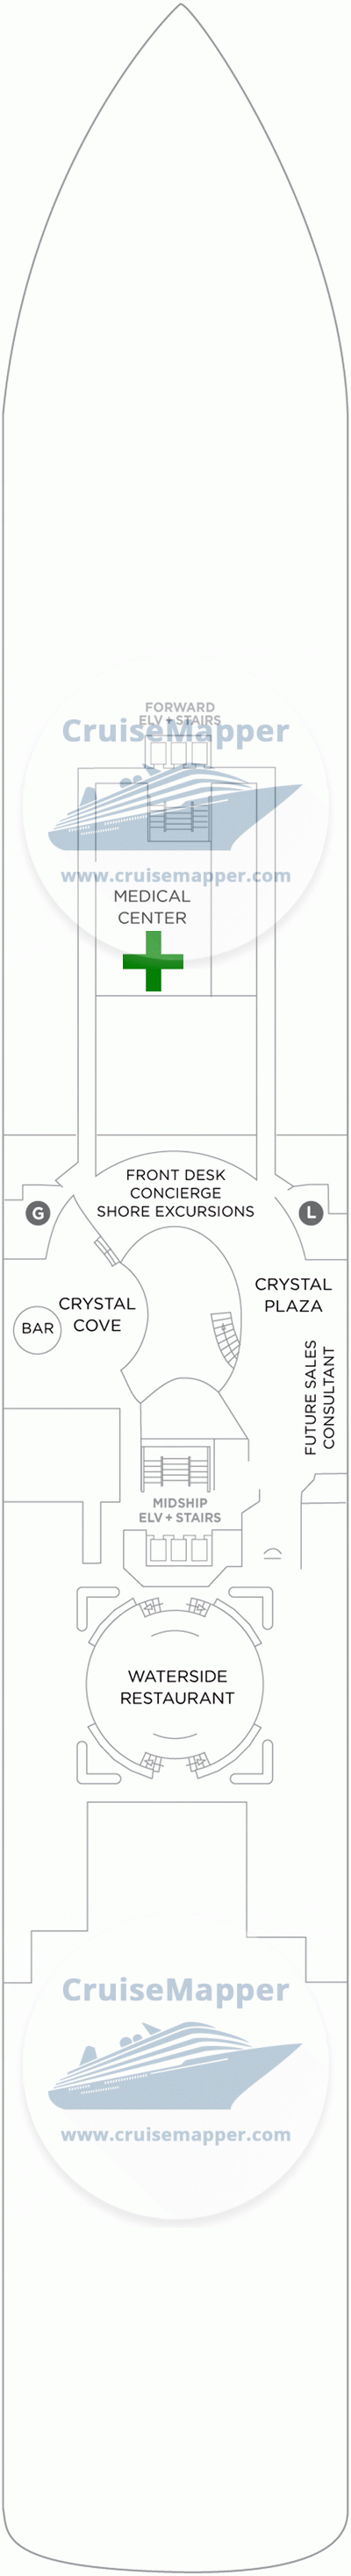 Crystal Serenity Deck 05 - Crystal-Lobby-Dining